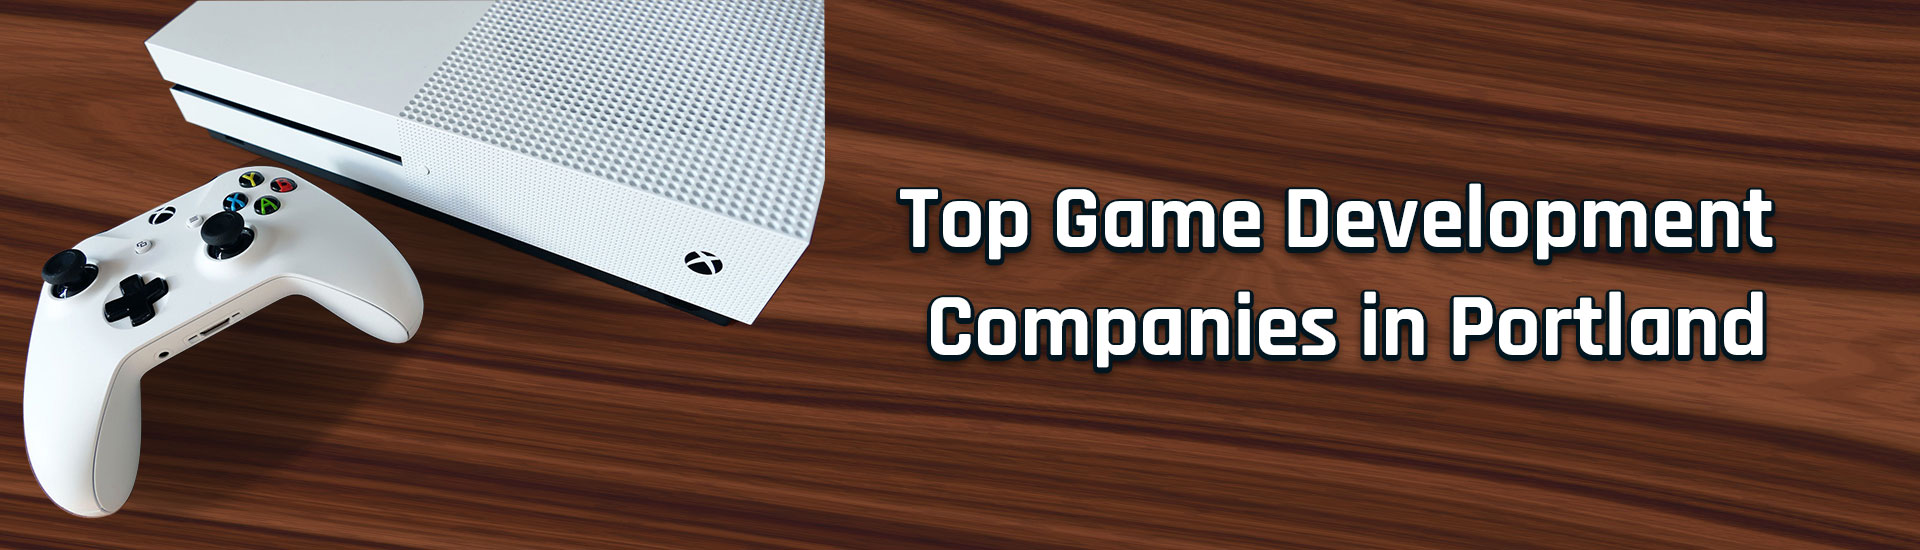 Top Game Development Companies in Portland